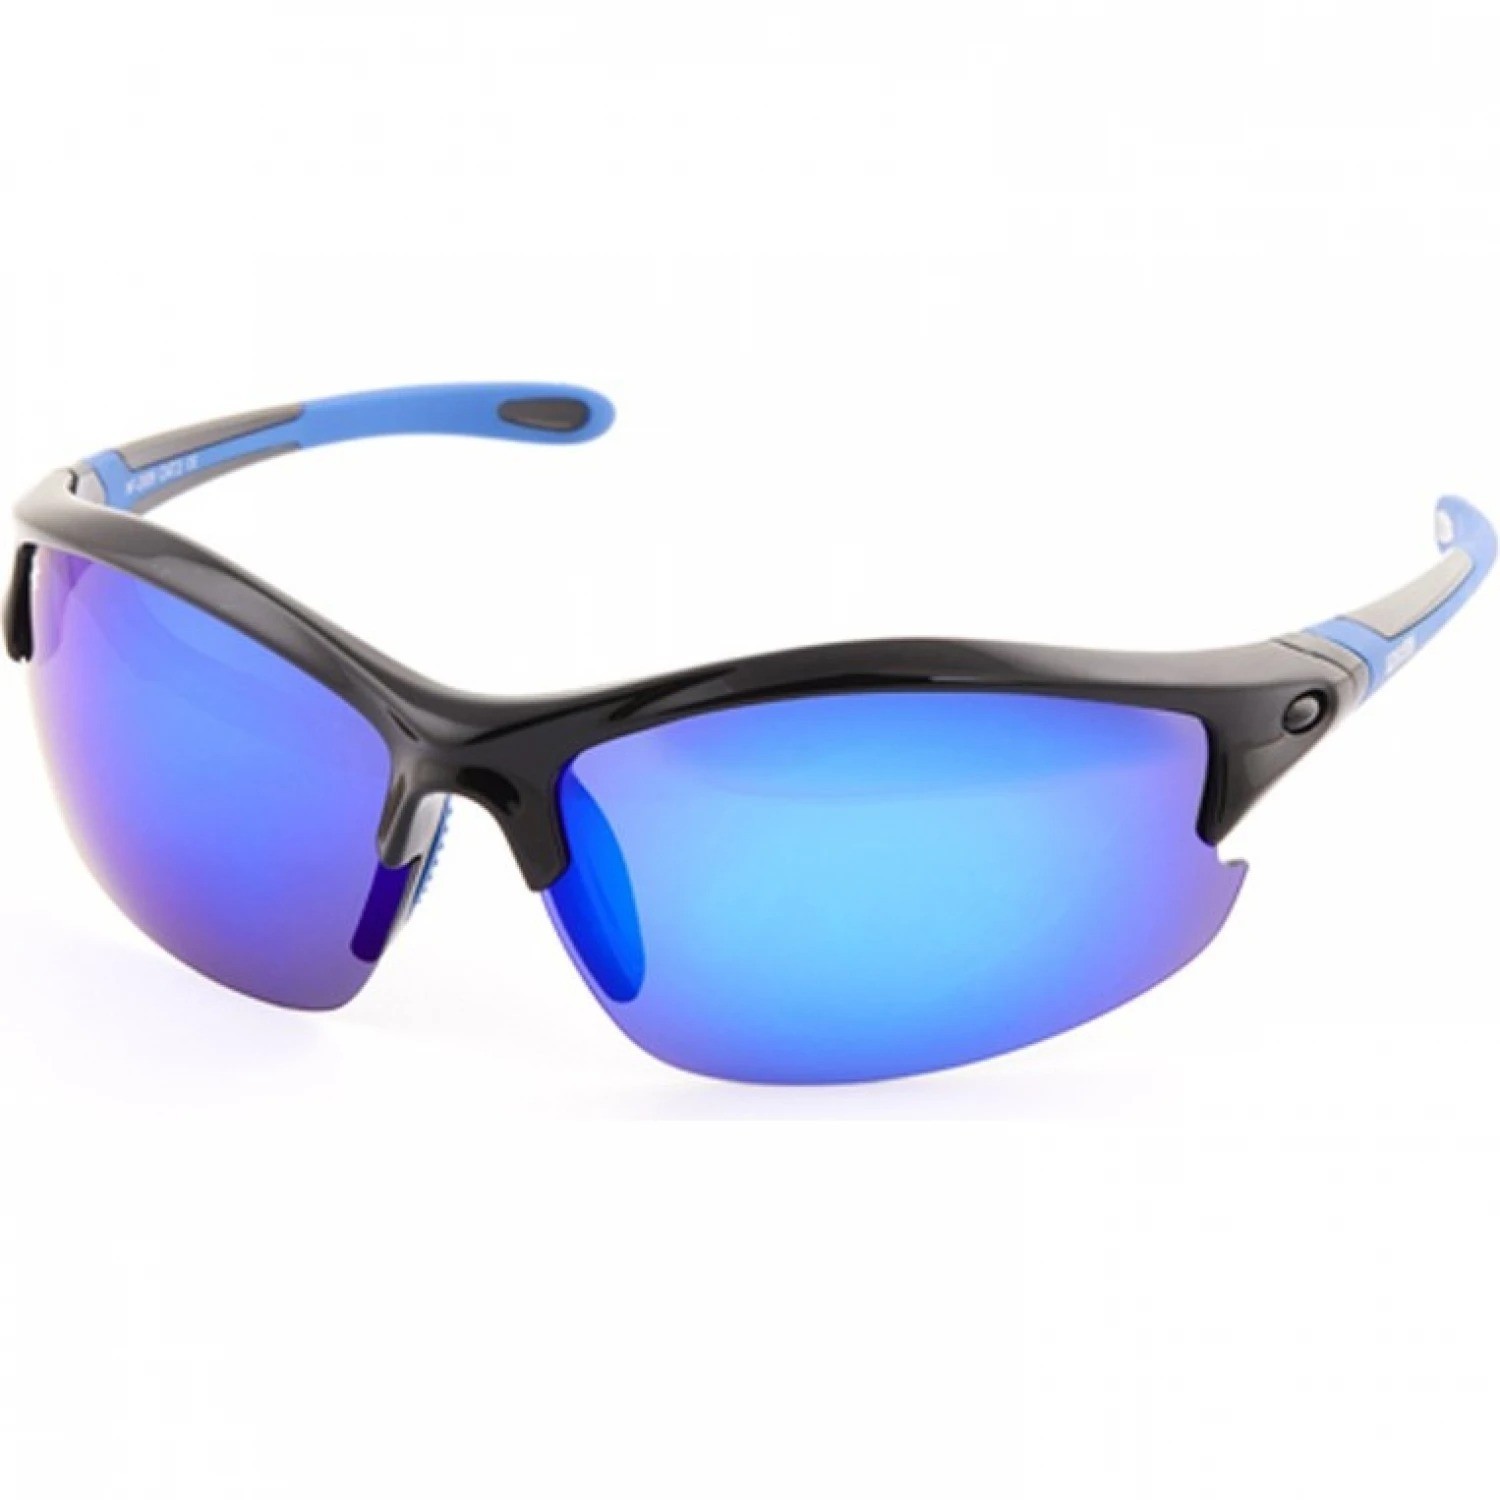 Очки Norfin Polarized sunglasses grey/blue - фото 1